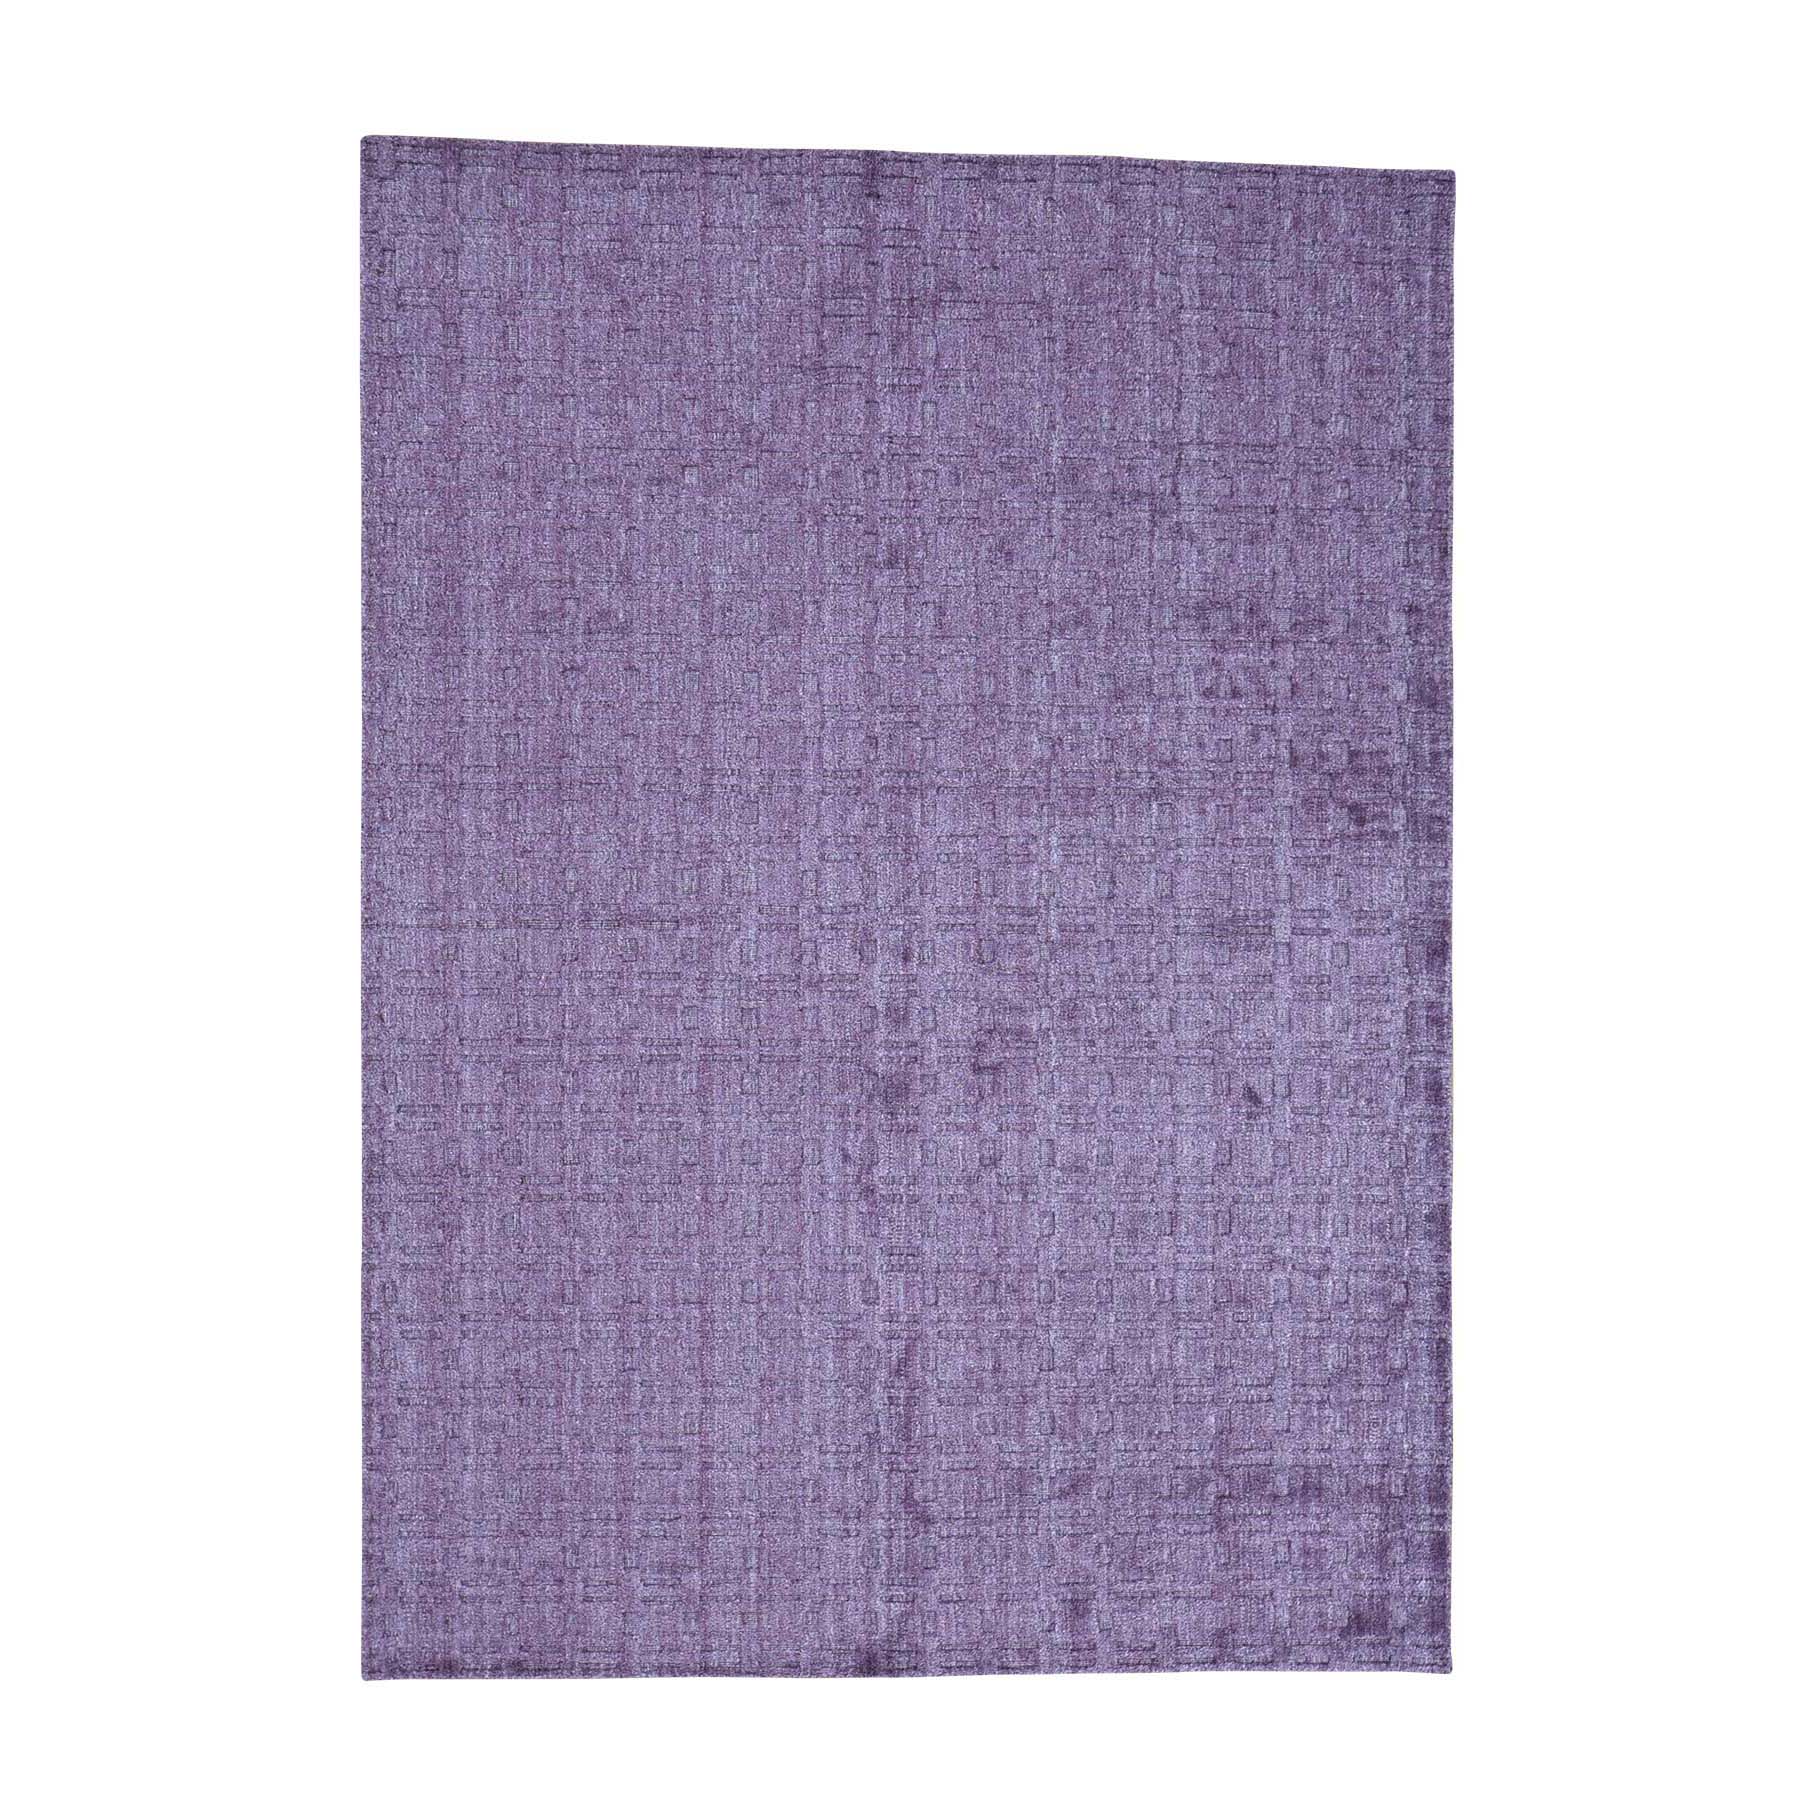 5'x7' Tone on Tone Purple Pure Wool Hand Loomed Oriental Rug 